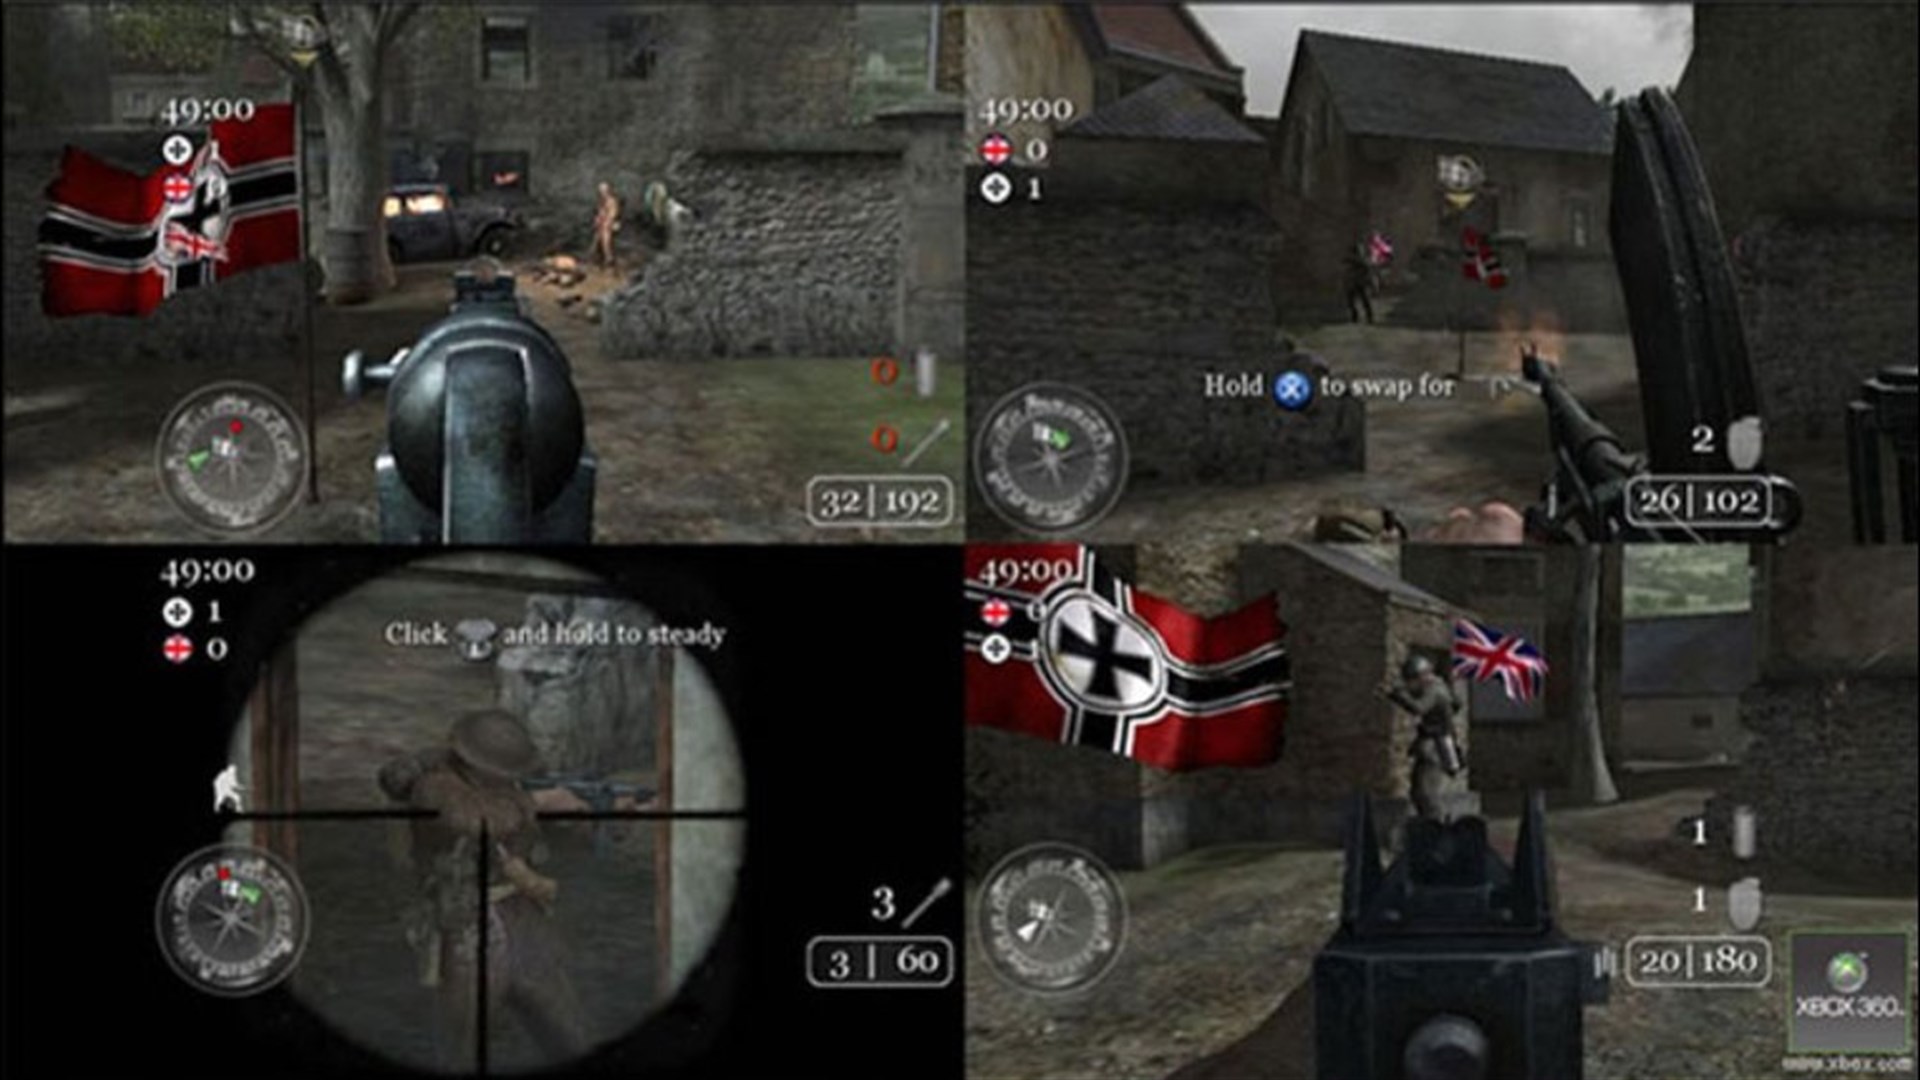 Игры пс3 на двоих один экран. Call of Duty 4 Xbox 360 Split Screen. Шутеры на Xbox 360 Split Screen. Гонки Split Screen Xbox 360. Call of Duty Xbox 360.